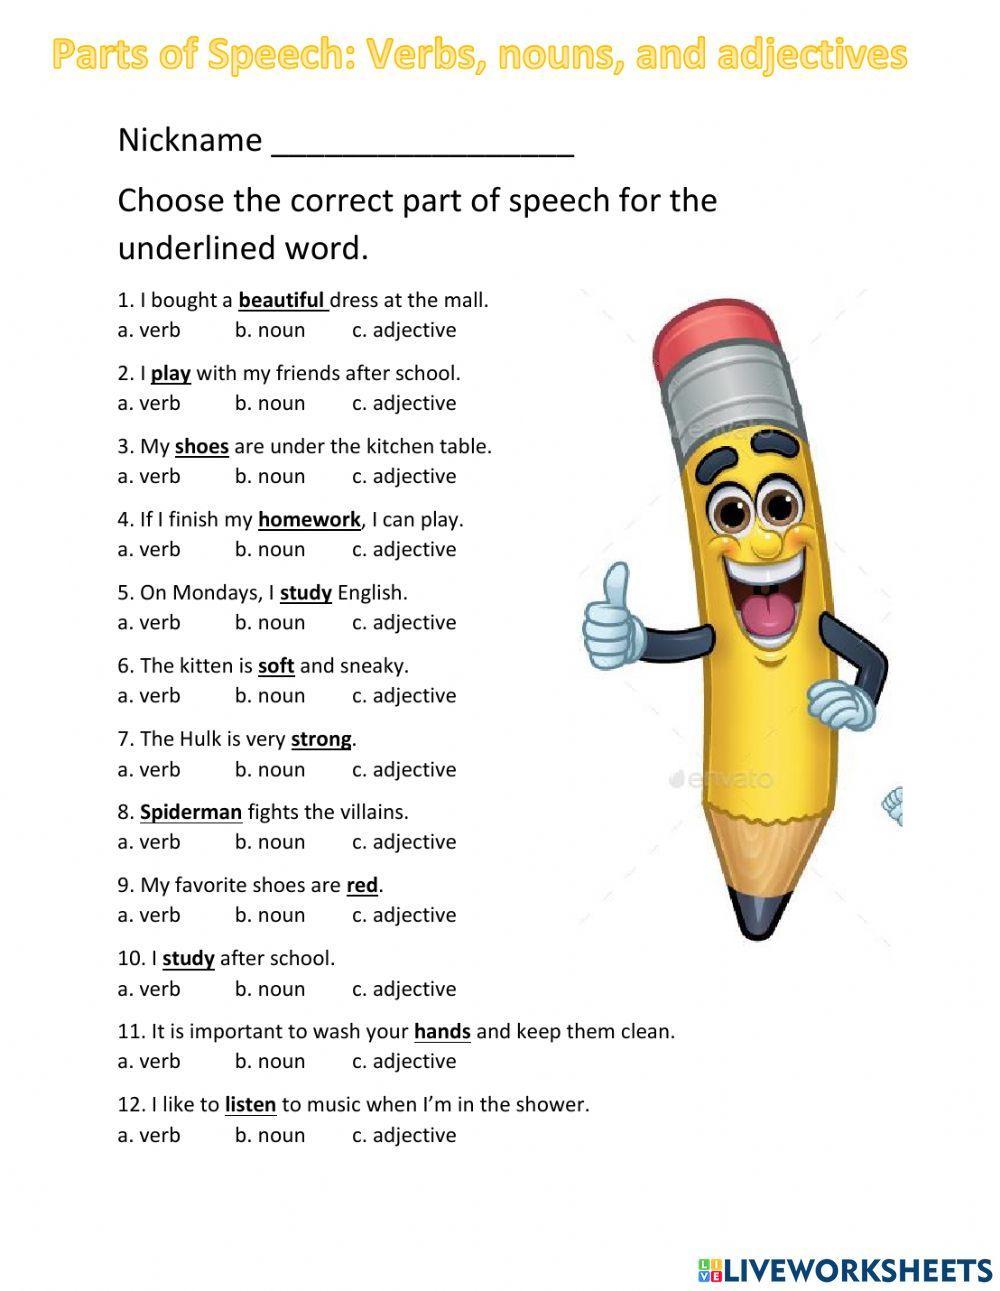 Parts of Speech: Noun, verbs, and adjectives